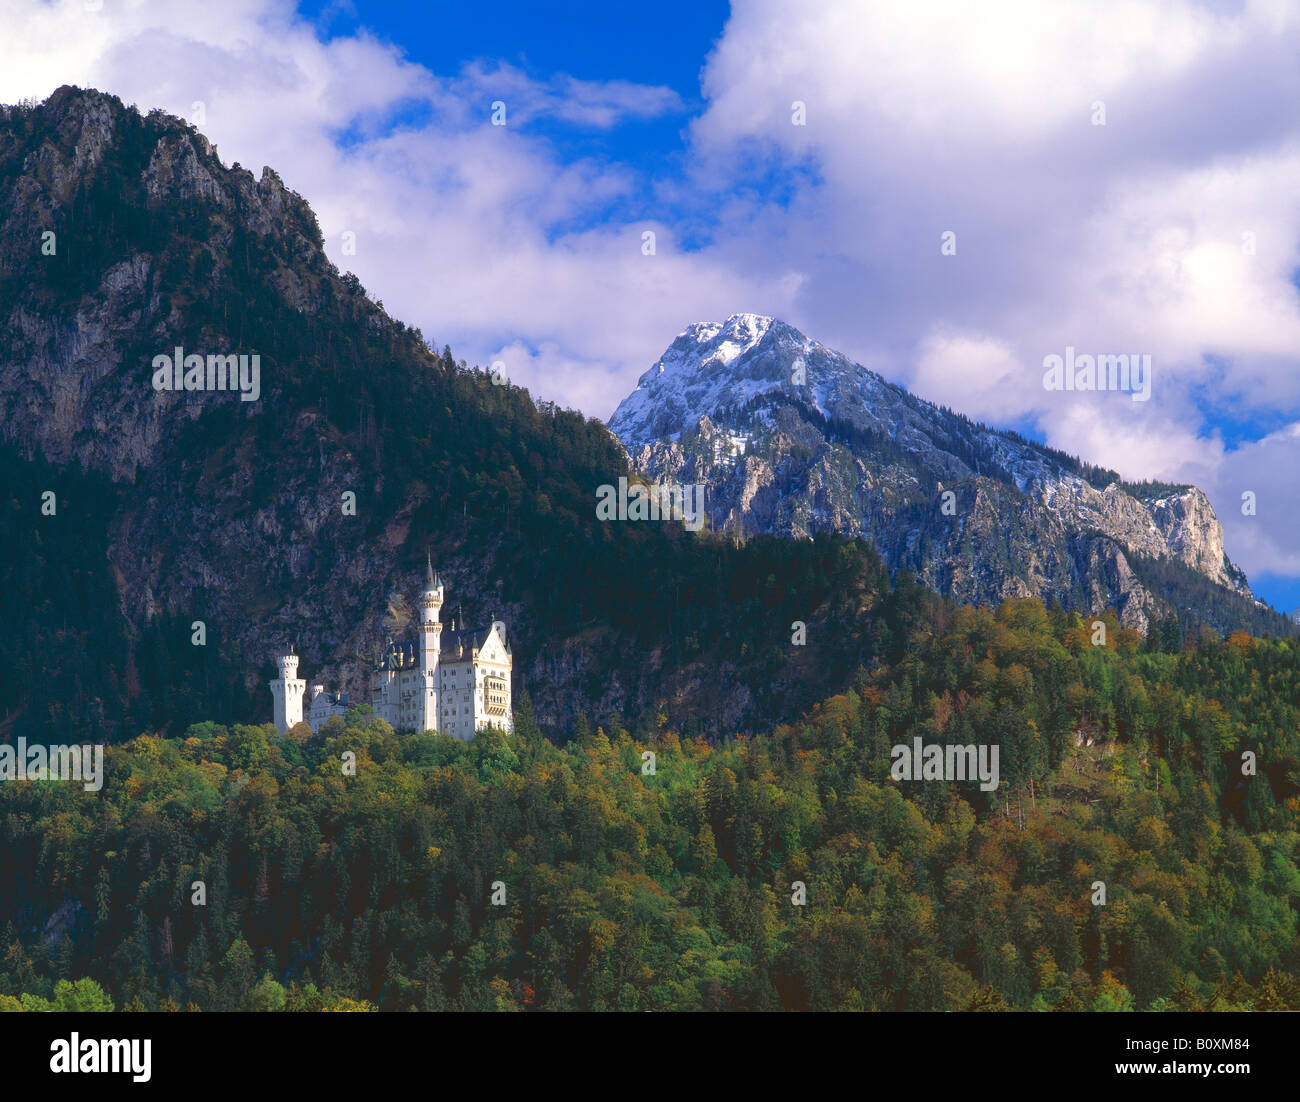 Neuschwannstein, fairytale castle built by Mad King Ludwig of Bavaria Stock Photo